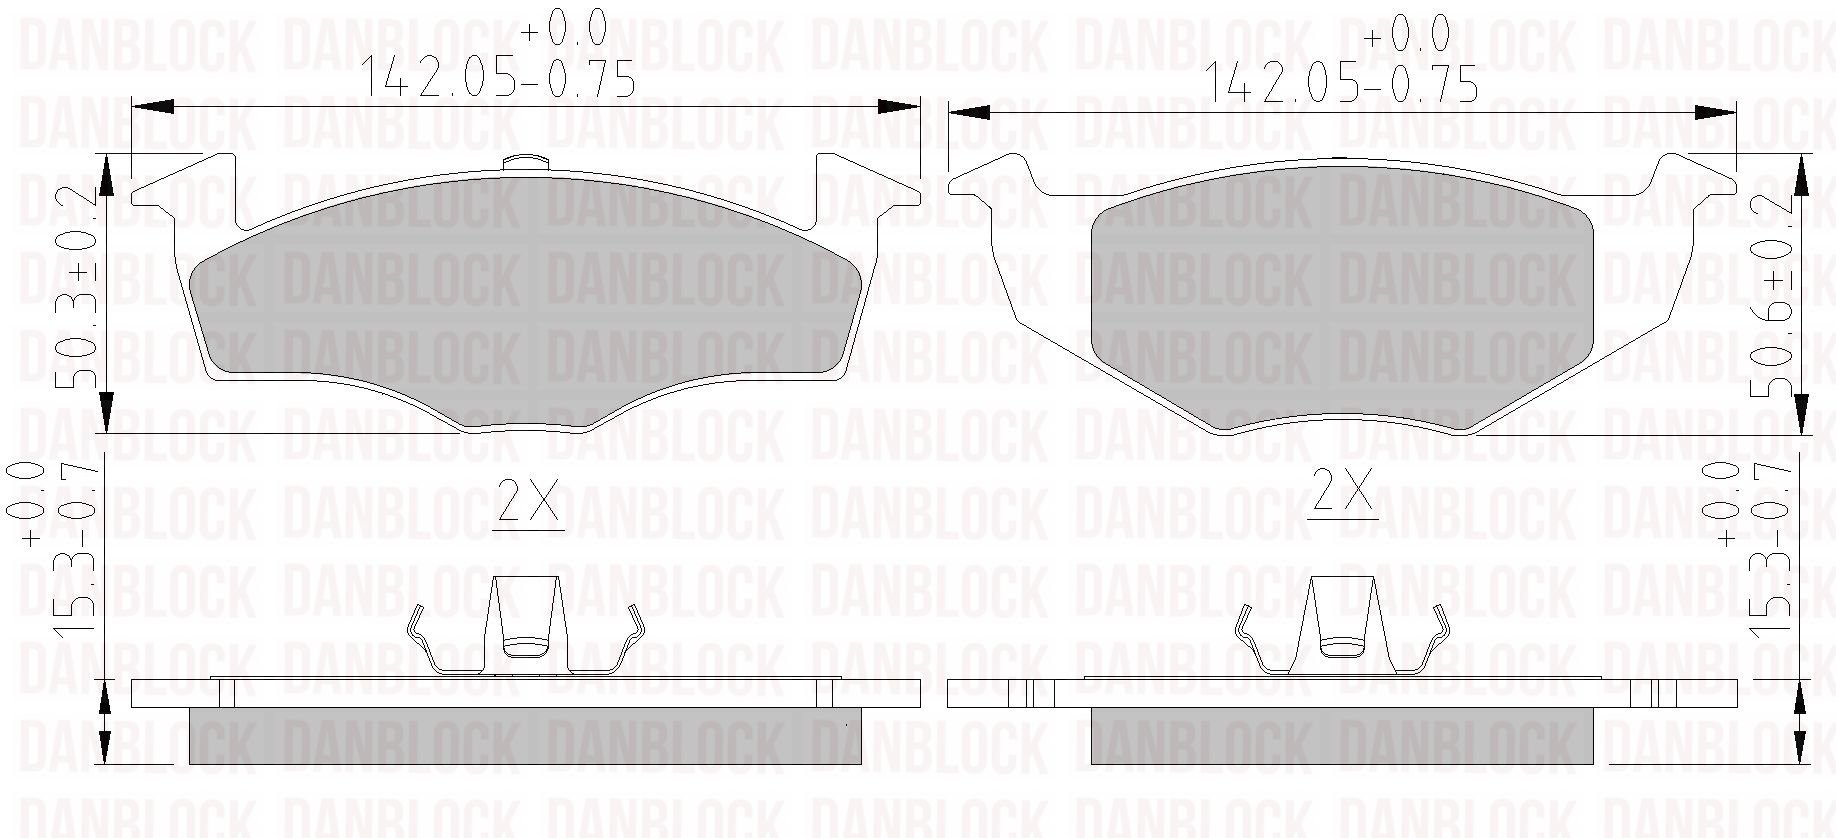 DANBLOCK DB 510366